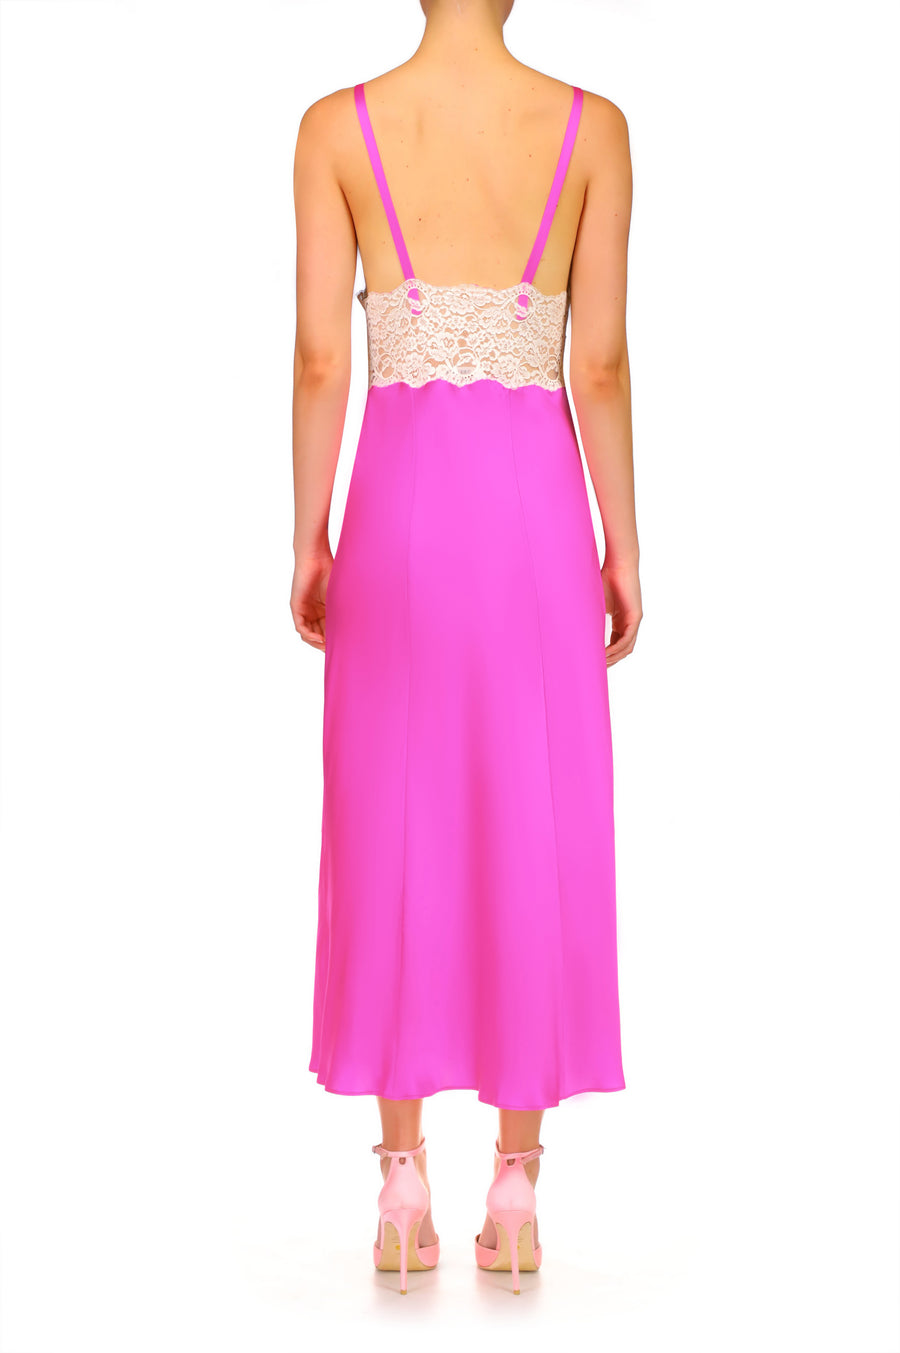 Hot Pink Silk Satin And Lace Bias Slip Dress